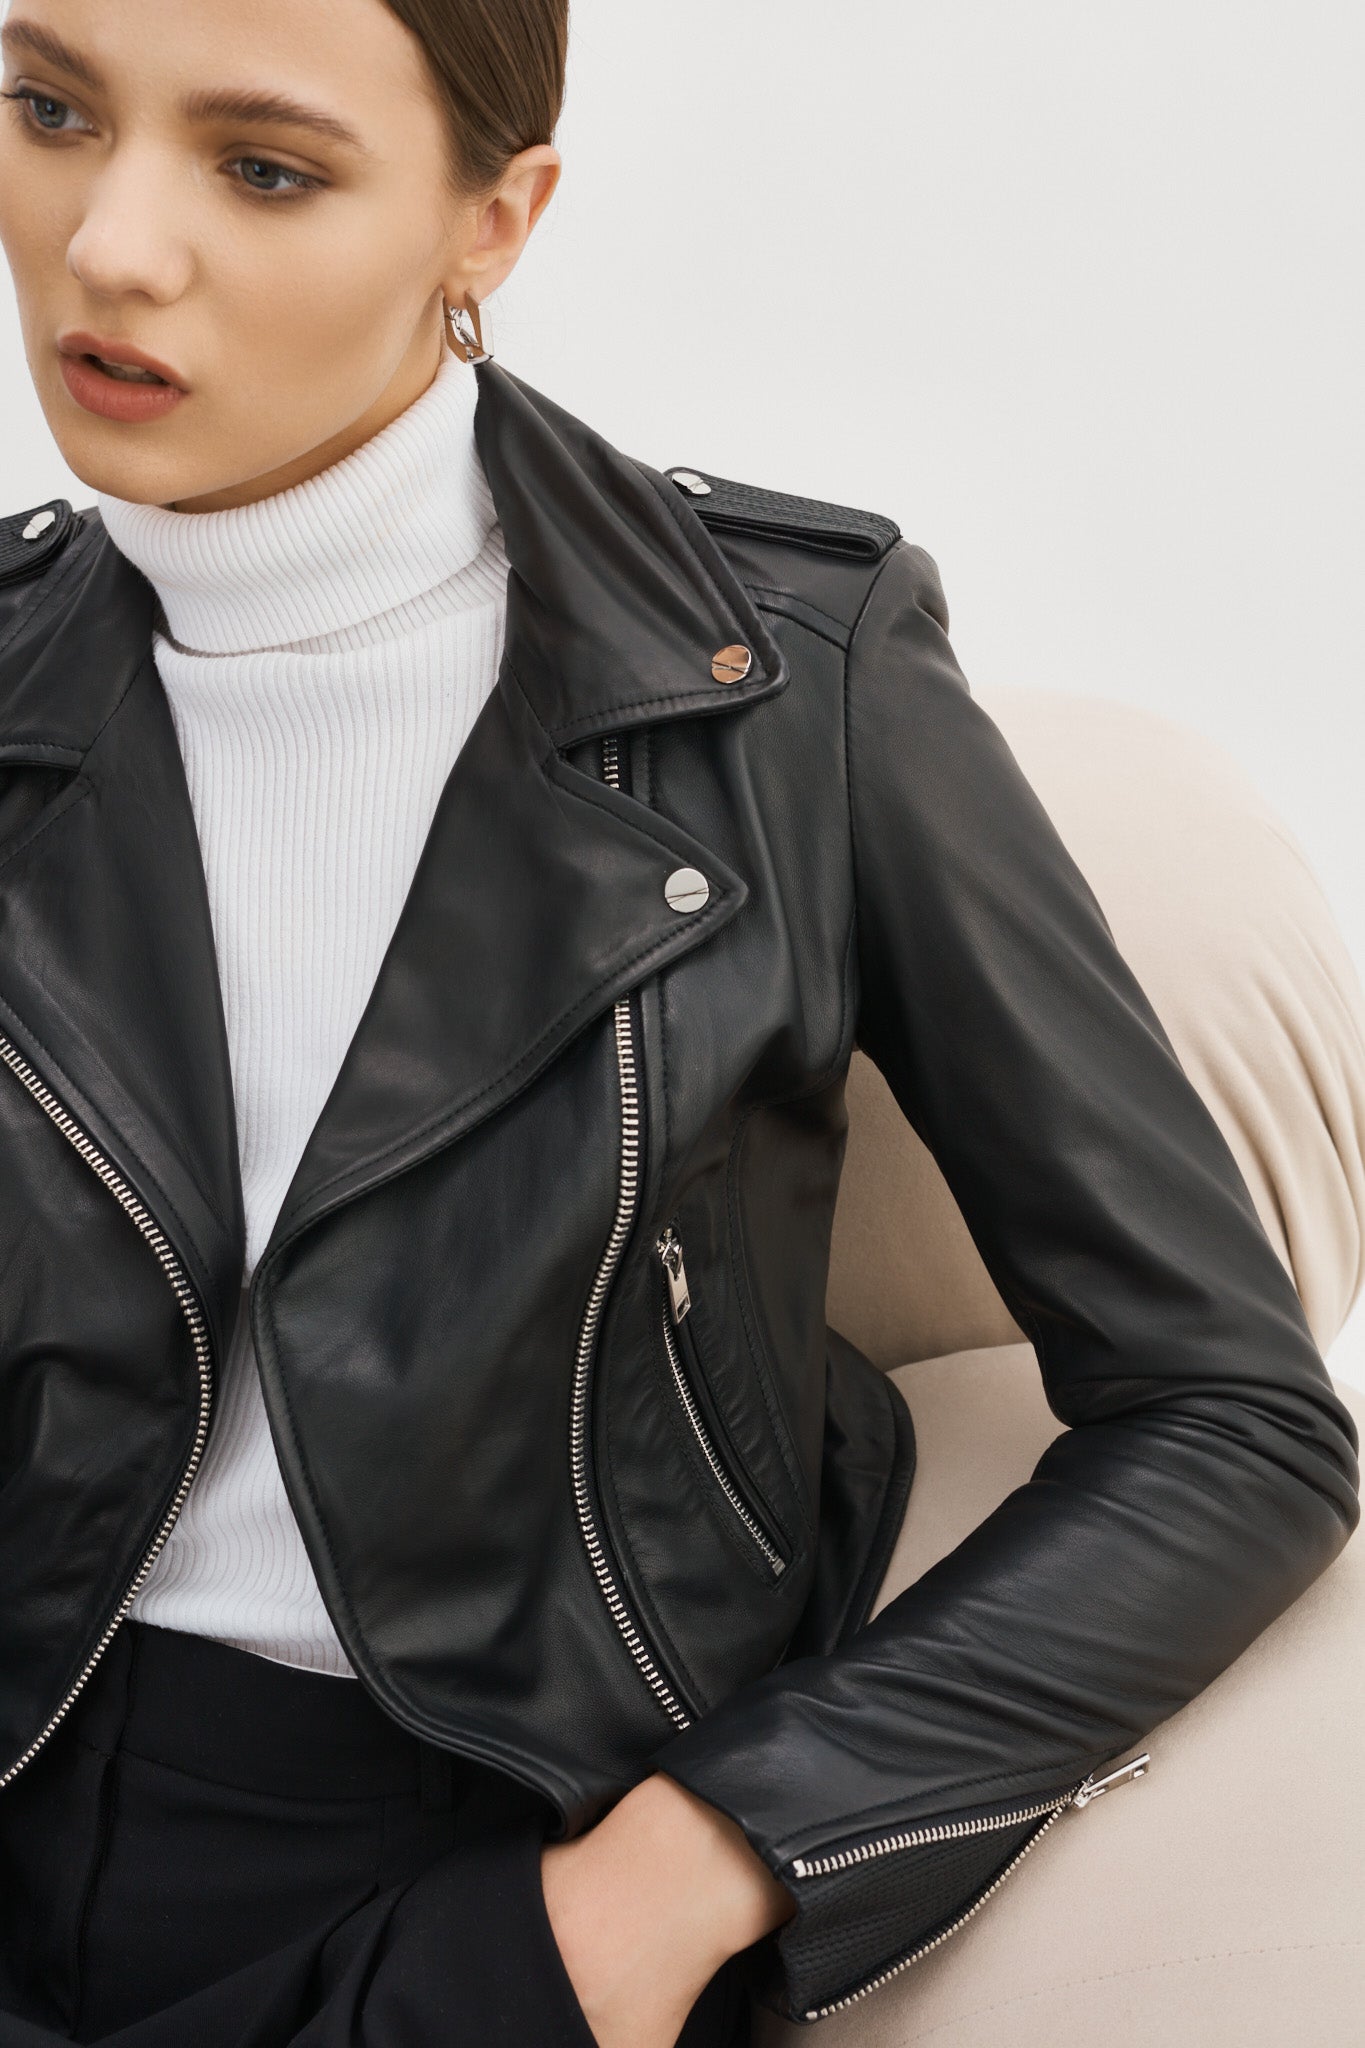 LEO BOUTIQUE Donna Iconic Leather Biker Jacket Black Silver LAMARQUE 